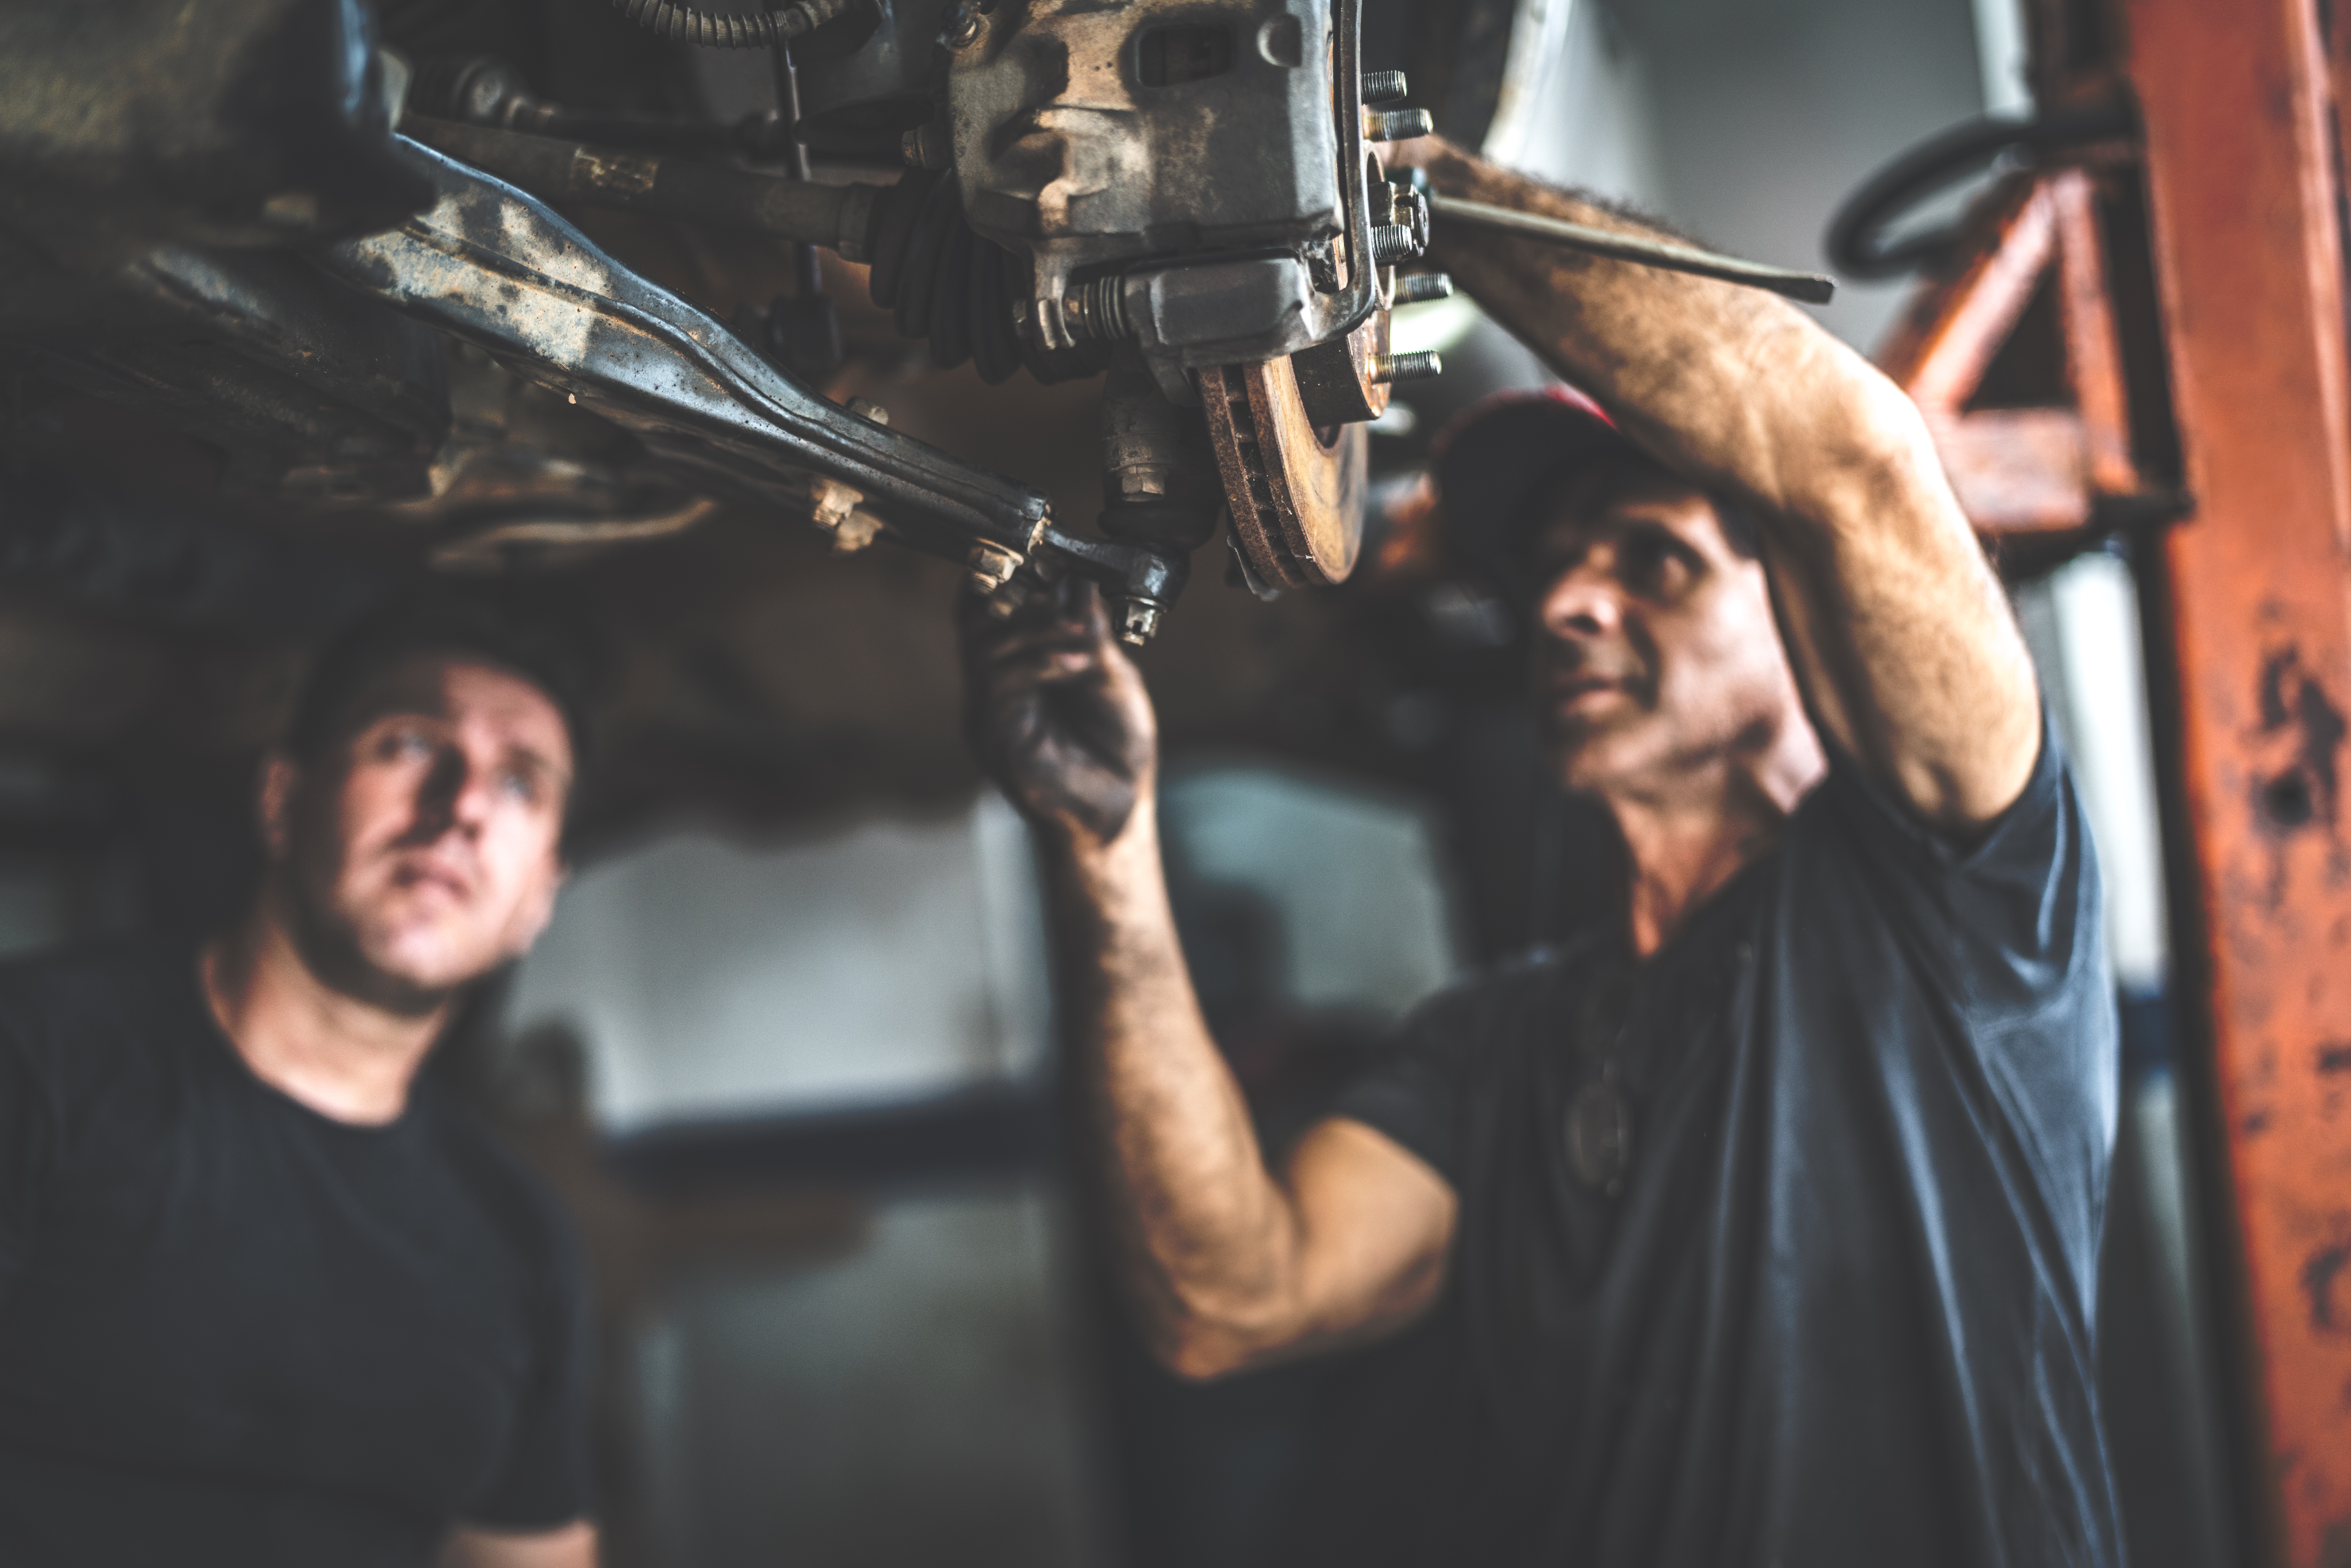 Professional mechanic repairing a car in auto repair shop | Source: Getty Images